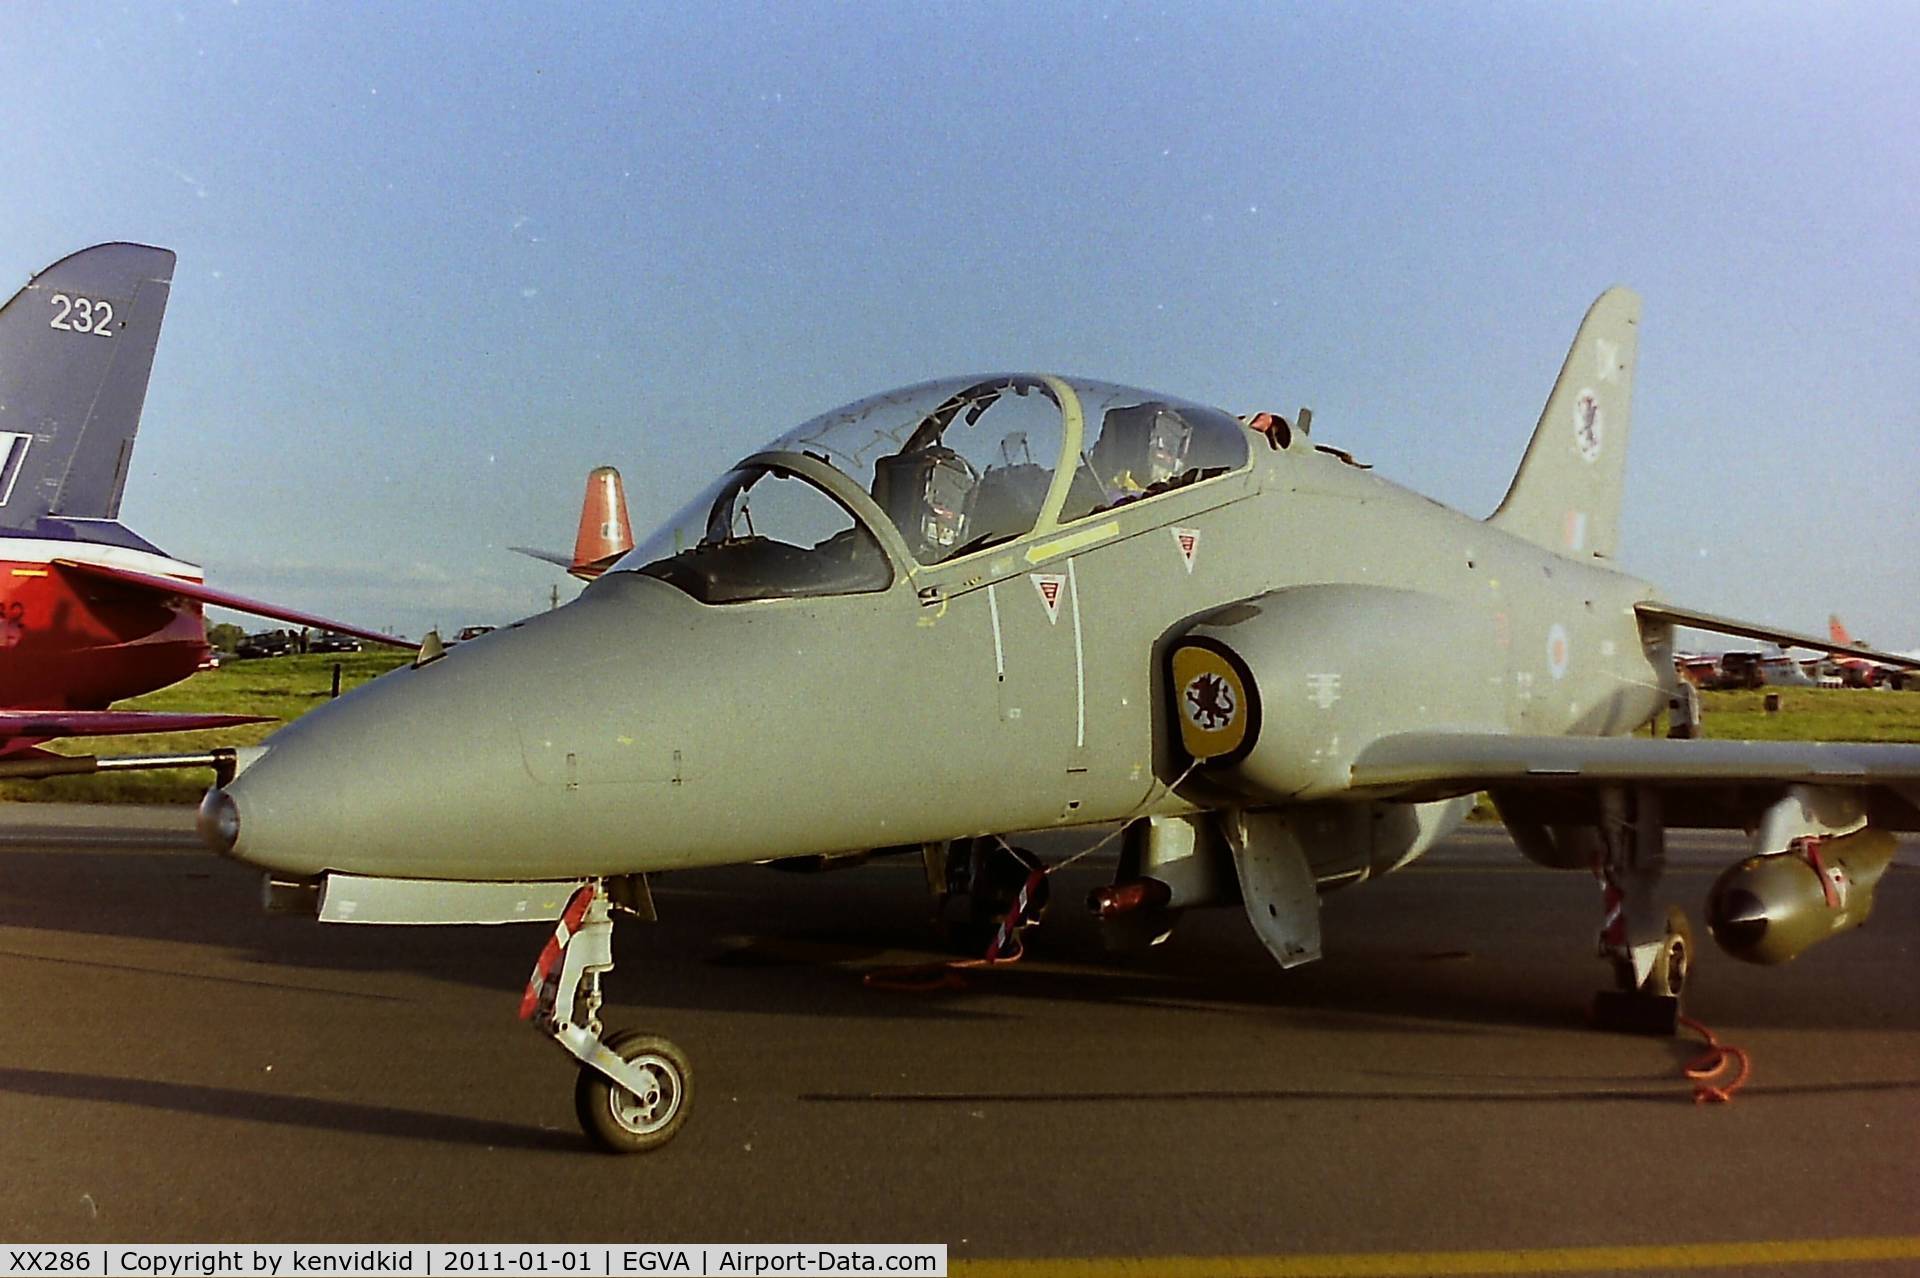 XX286, 1979 Hawker Siddeley Hawk T.1A C/N 112/312111, At RIAT 1993, scanned from negative.